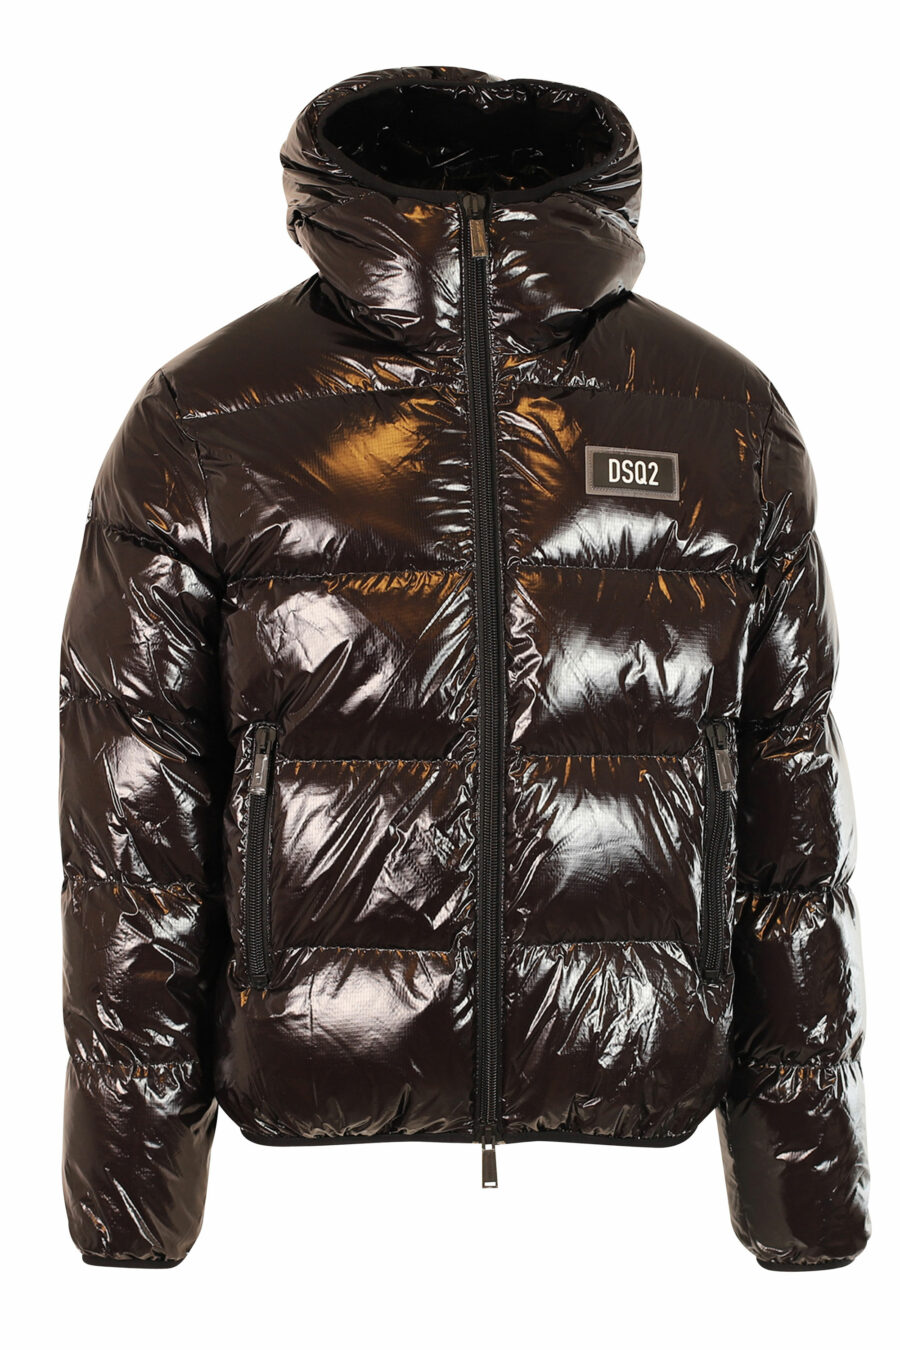 Black shiny puff kaban puffer jacket with high collar and mini-logo - 8054148016357